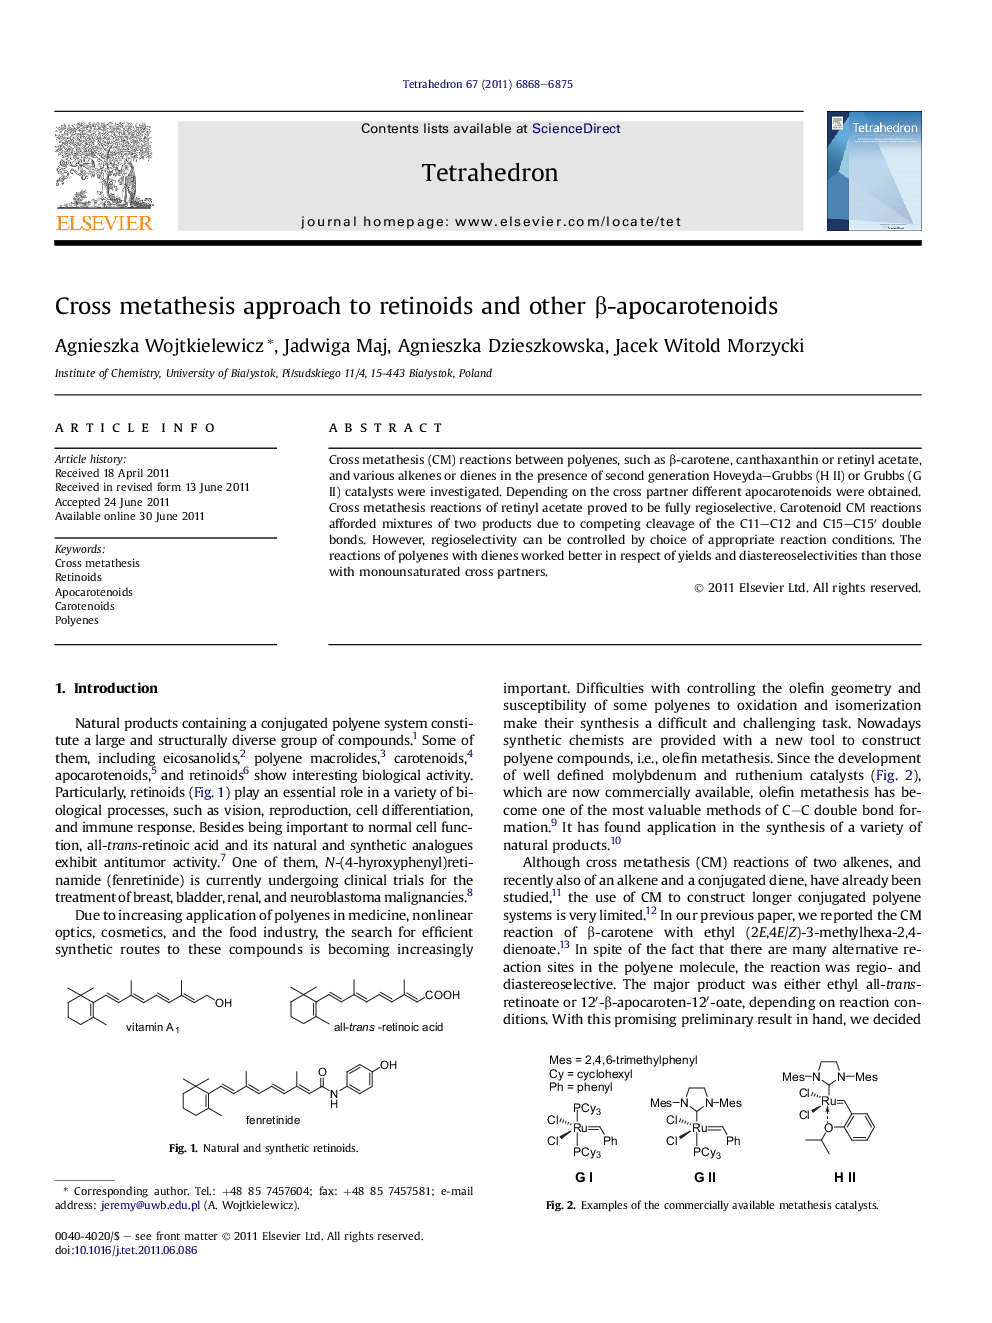 Cross metathesis approach to retinoids and other Î²-apocarotenoids